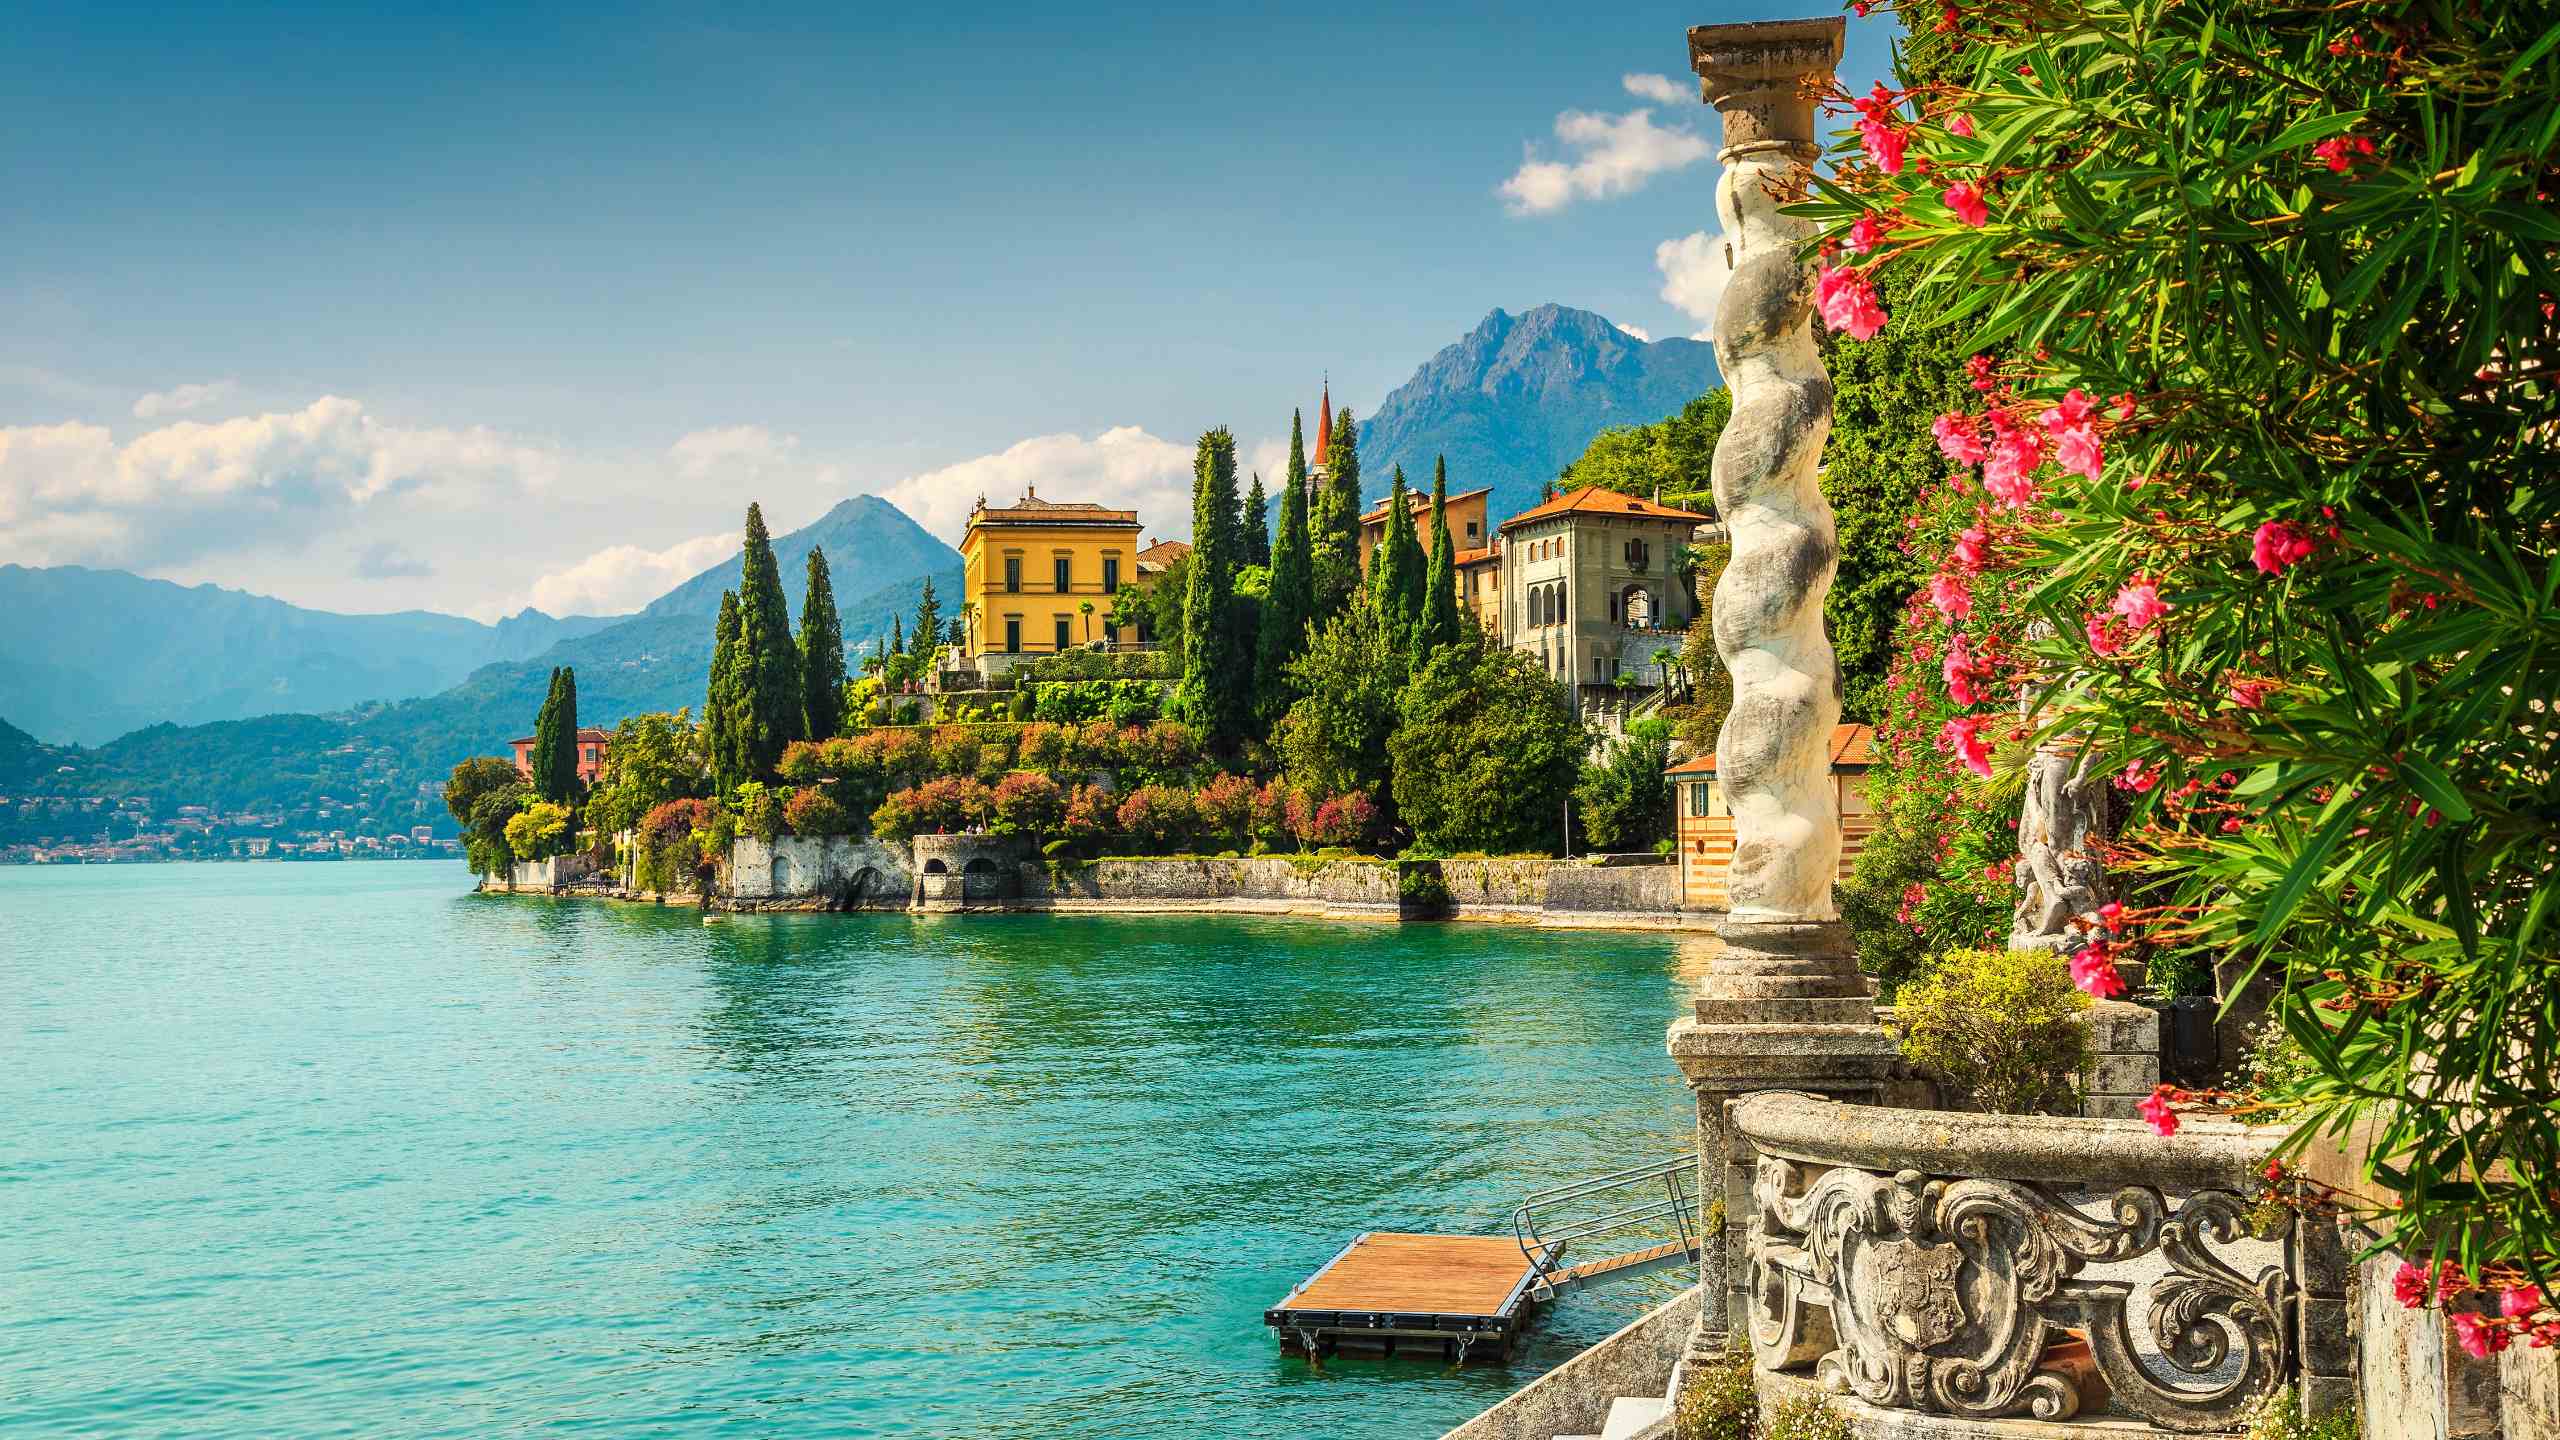 Villa Monastero Lake Como in Italy